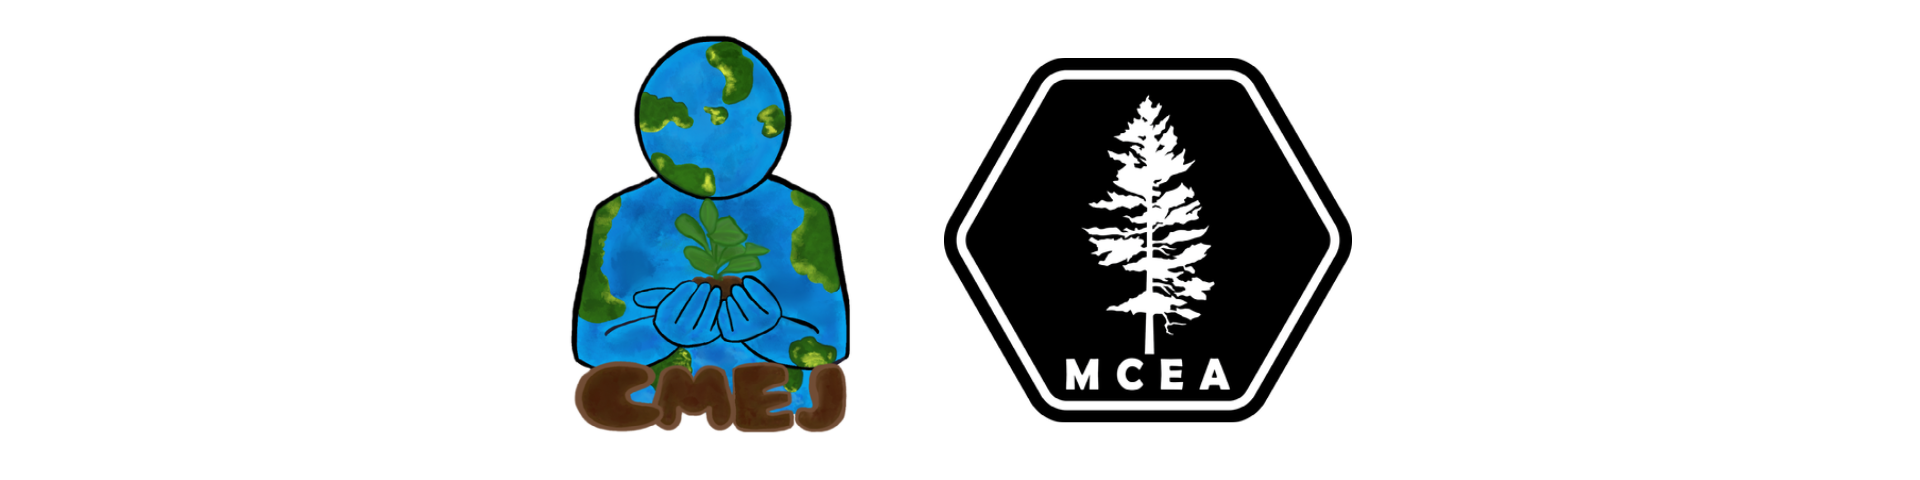 logos of M C E A and C M E J 